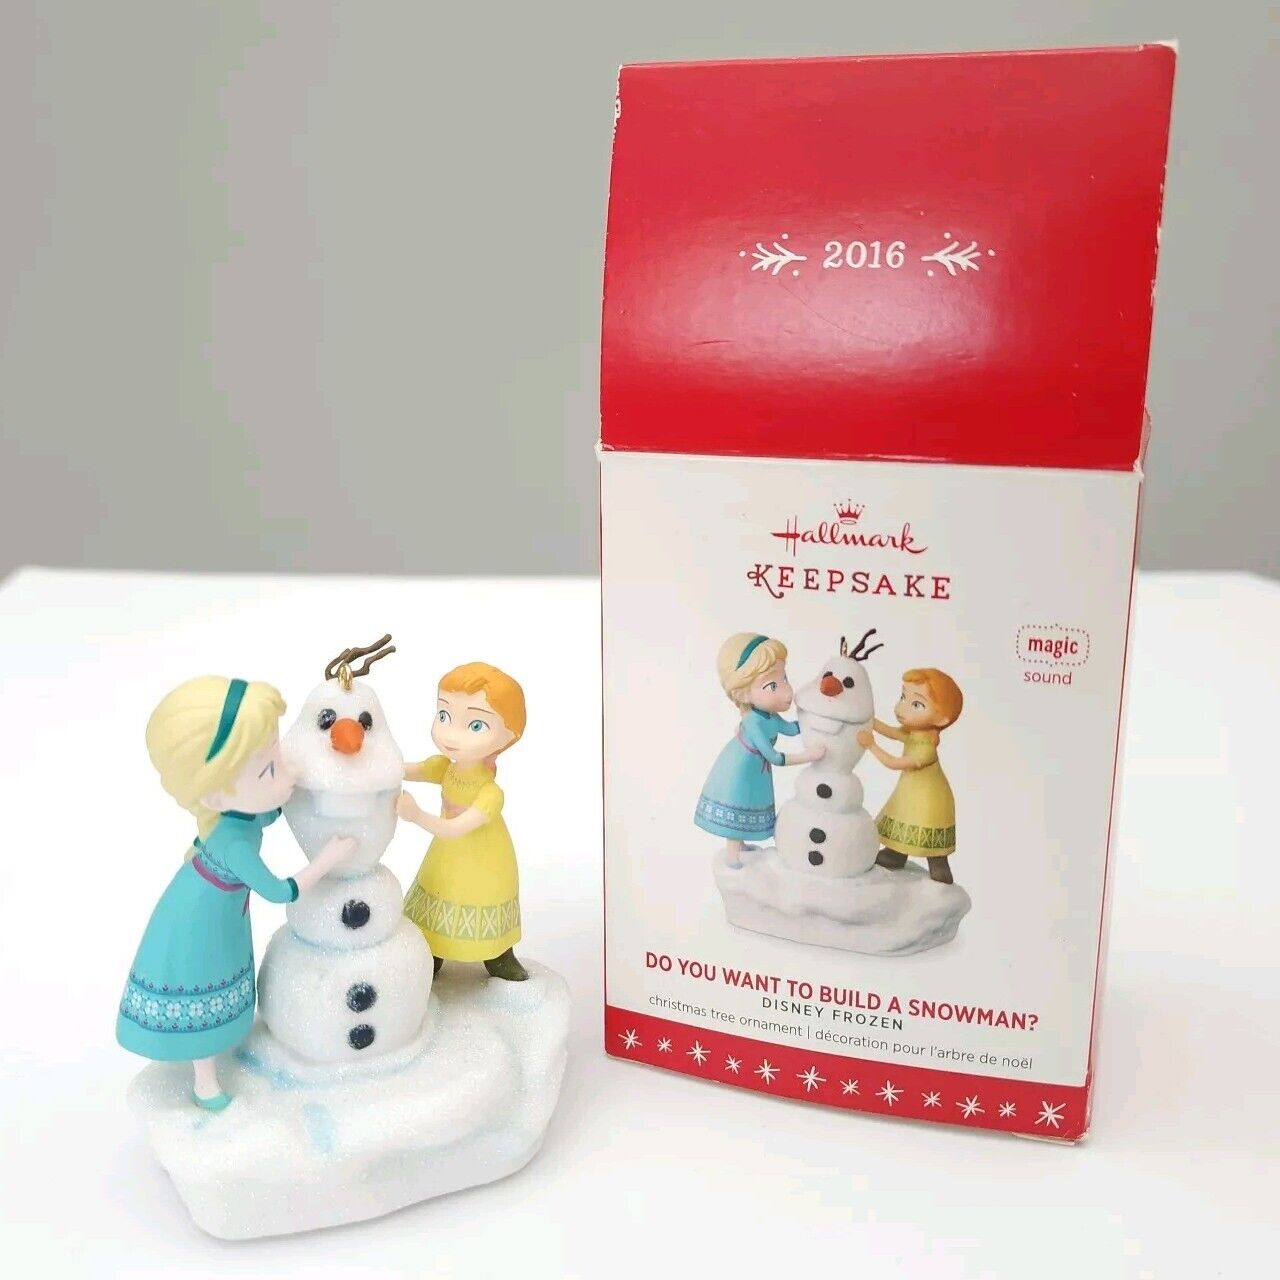 2016 Hallmark Keepsake Ornament Disney Frozen Do You Want To Build A Snowman